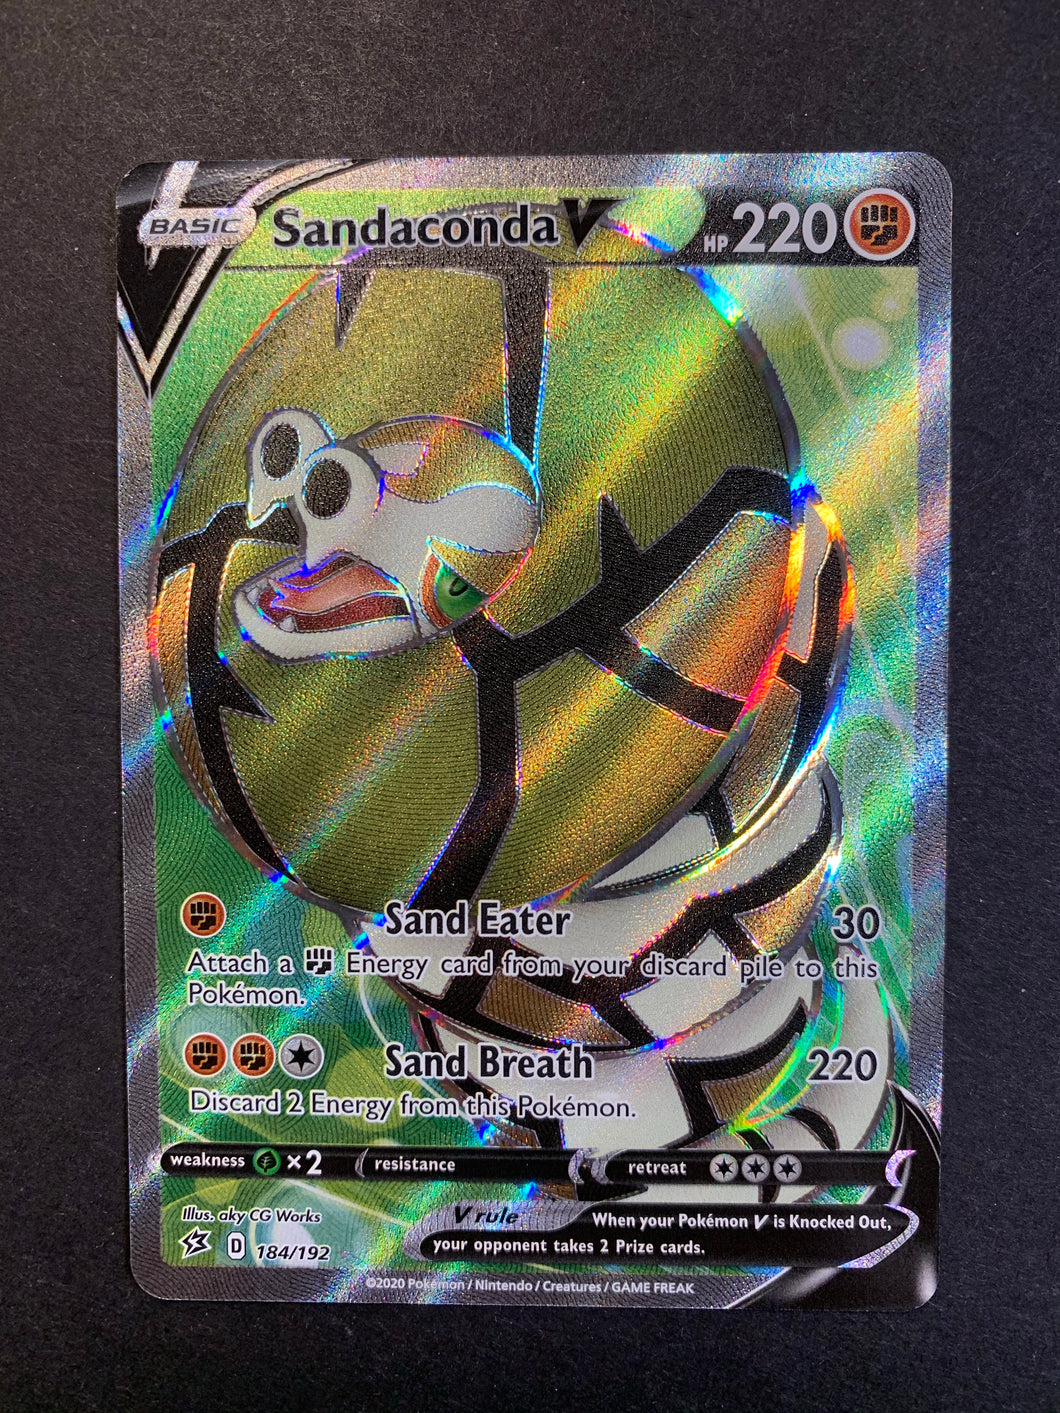 Sandaconda V, Pokémon